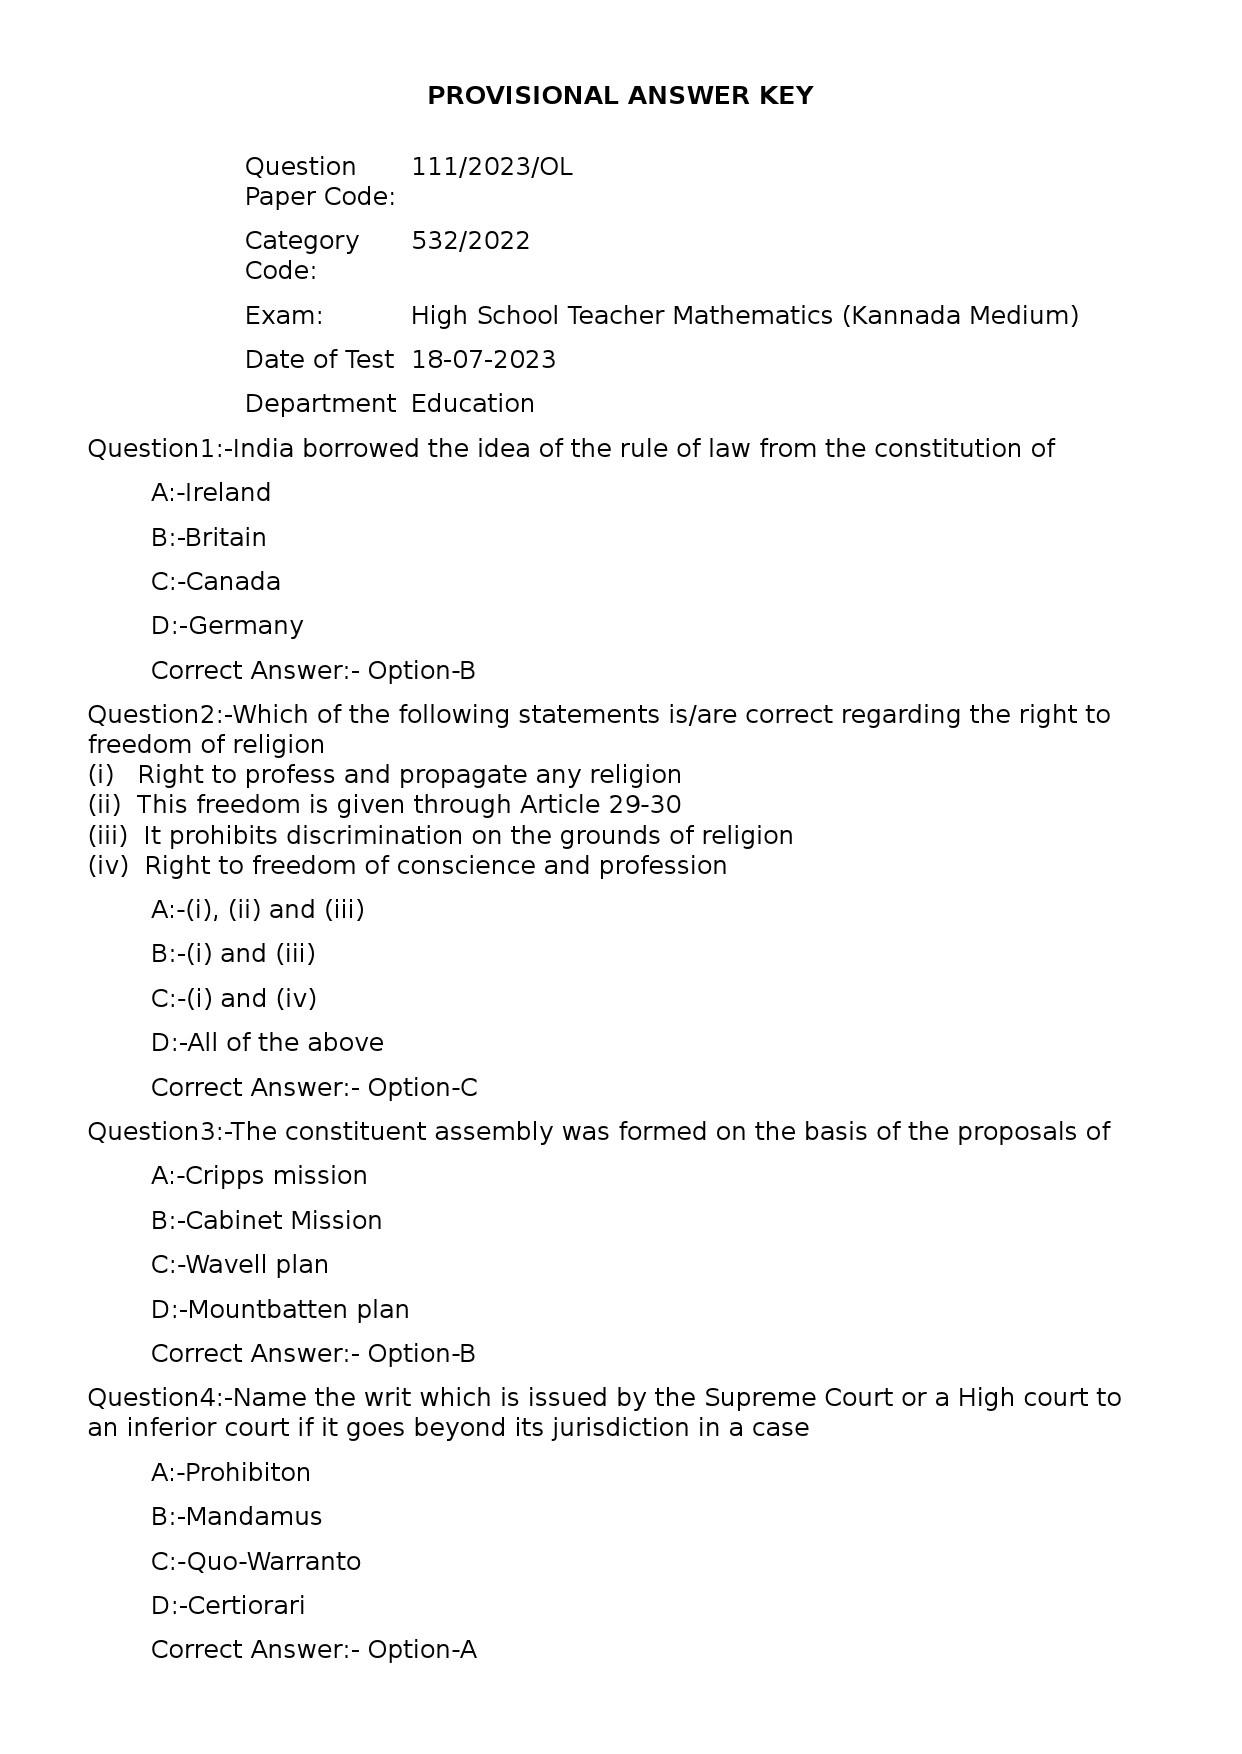 KPSC High School Teacher Mathematics Kannada Medium Exam 2023 Code 1112023OL 1